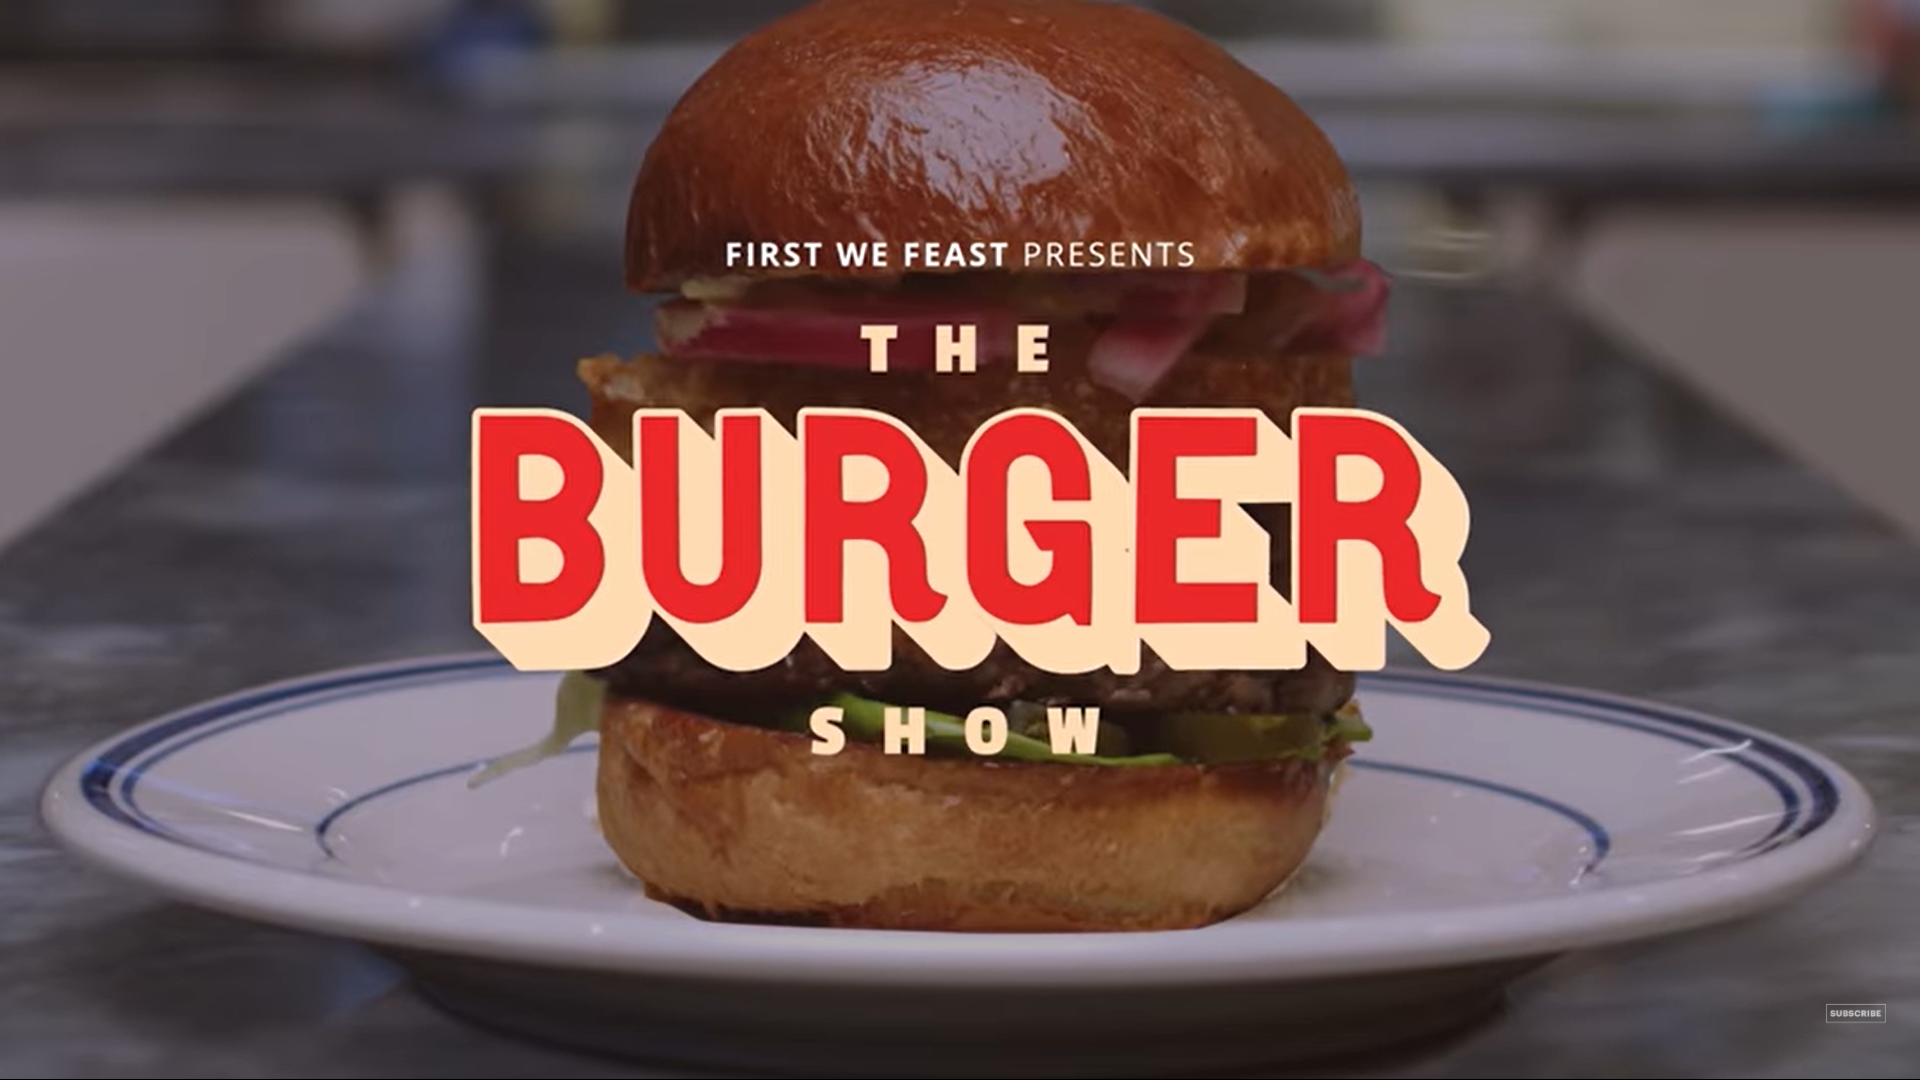 The Burger Show